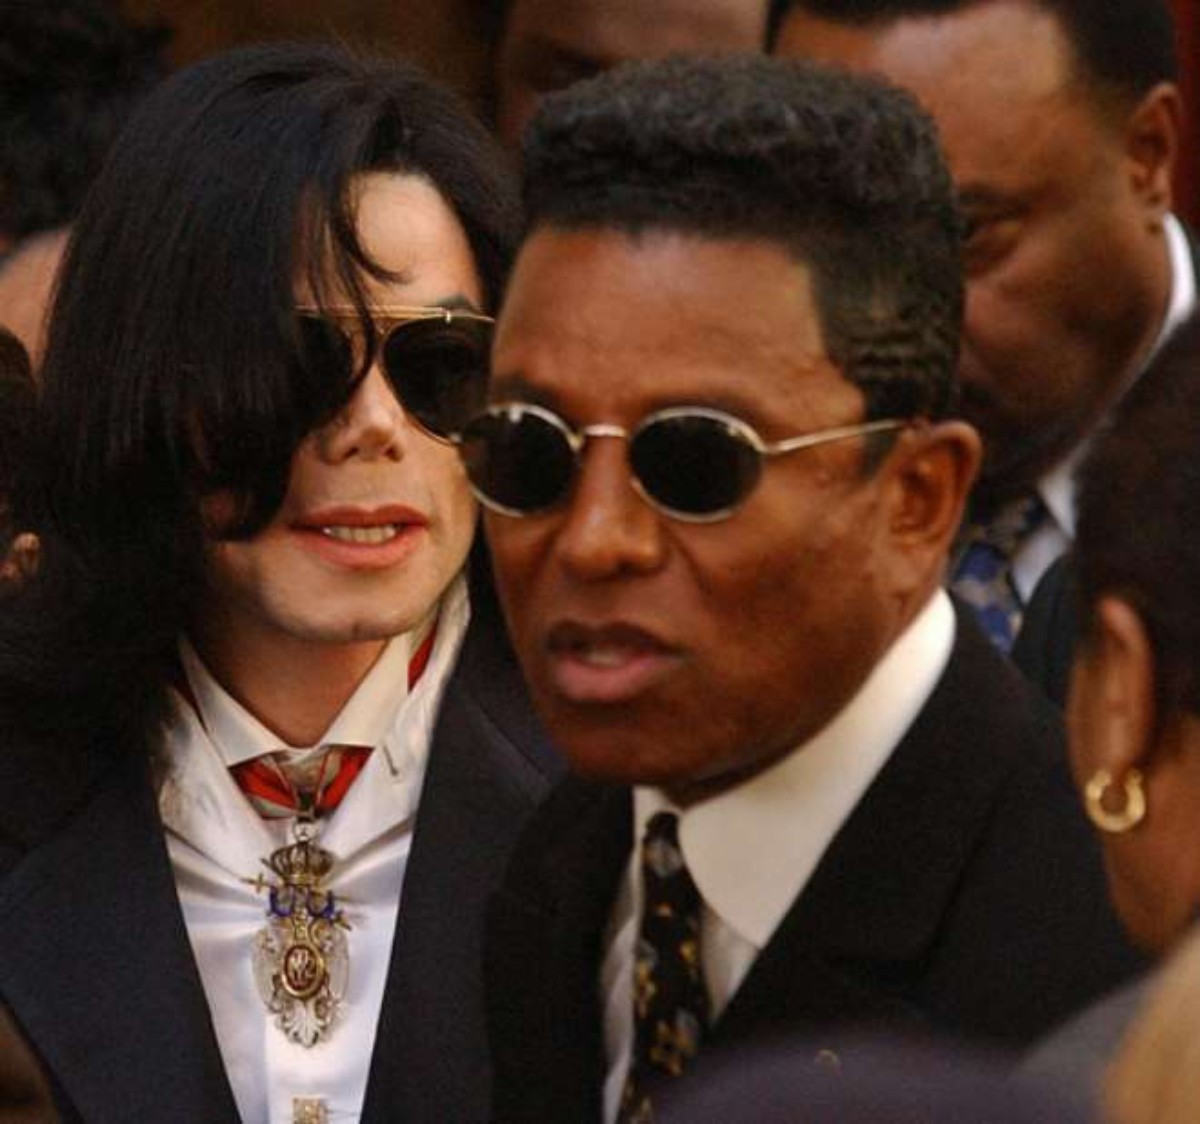 Michael and Jermaine Jackson